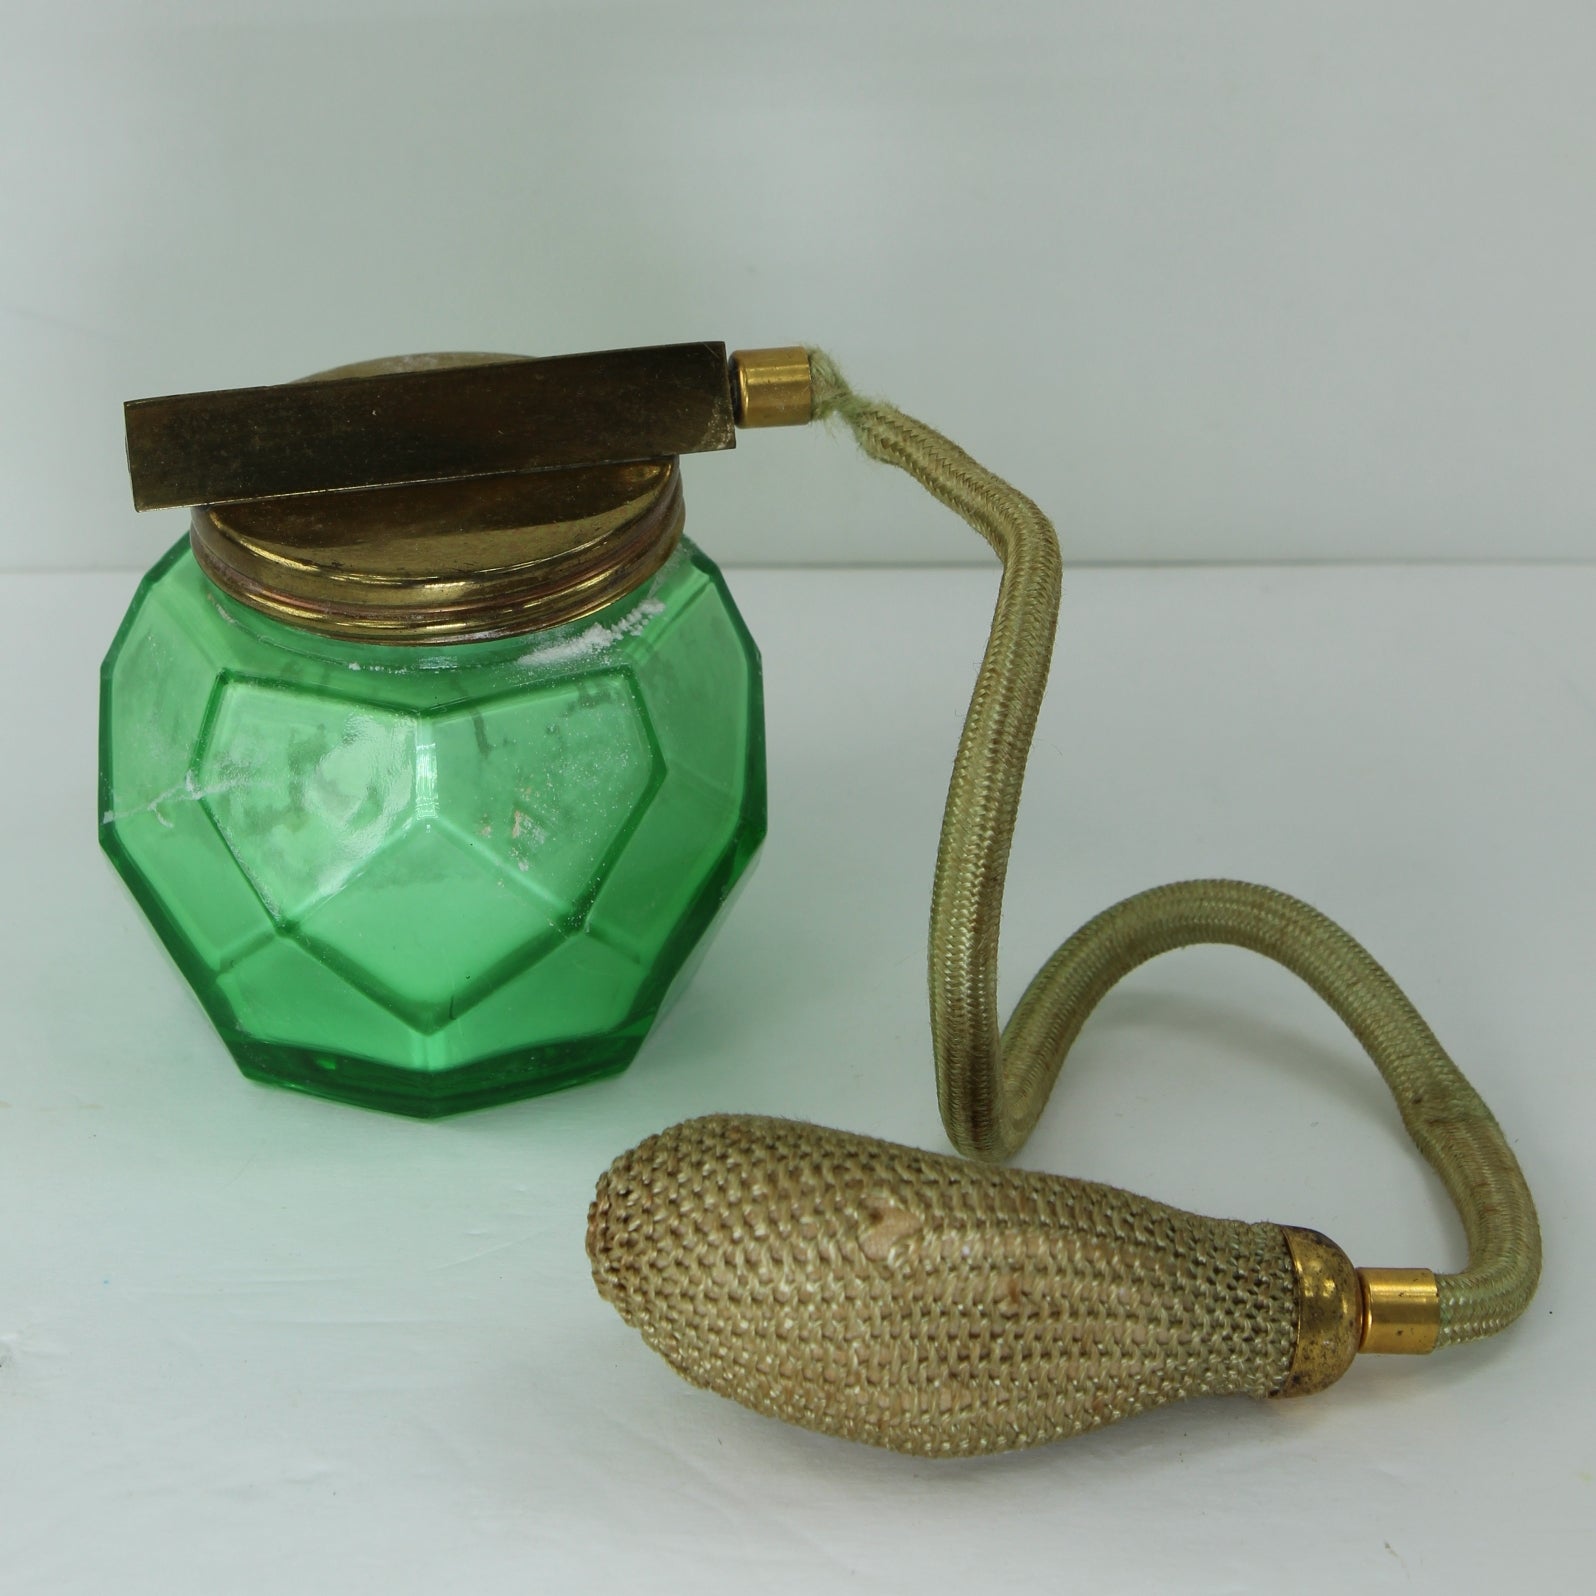 Extremely Rare Antique 1930s Volupte Spray Body Powder Atomizer Green Glass Powder Filled